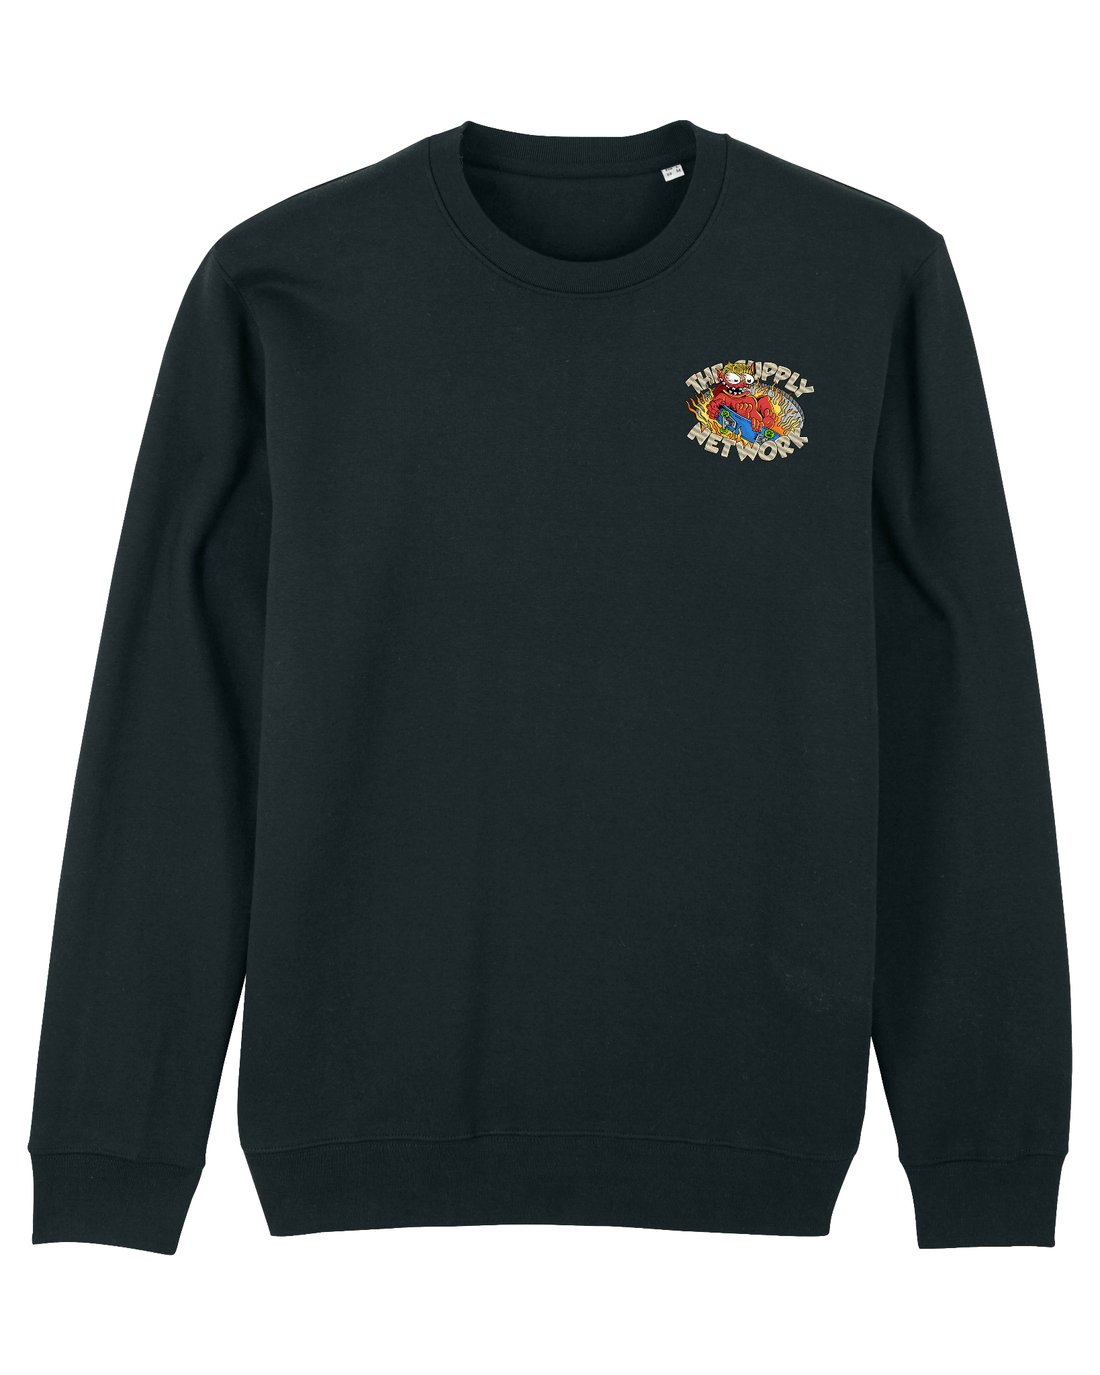 Black Skater Sweatshirt, Devil Baby Front Print